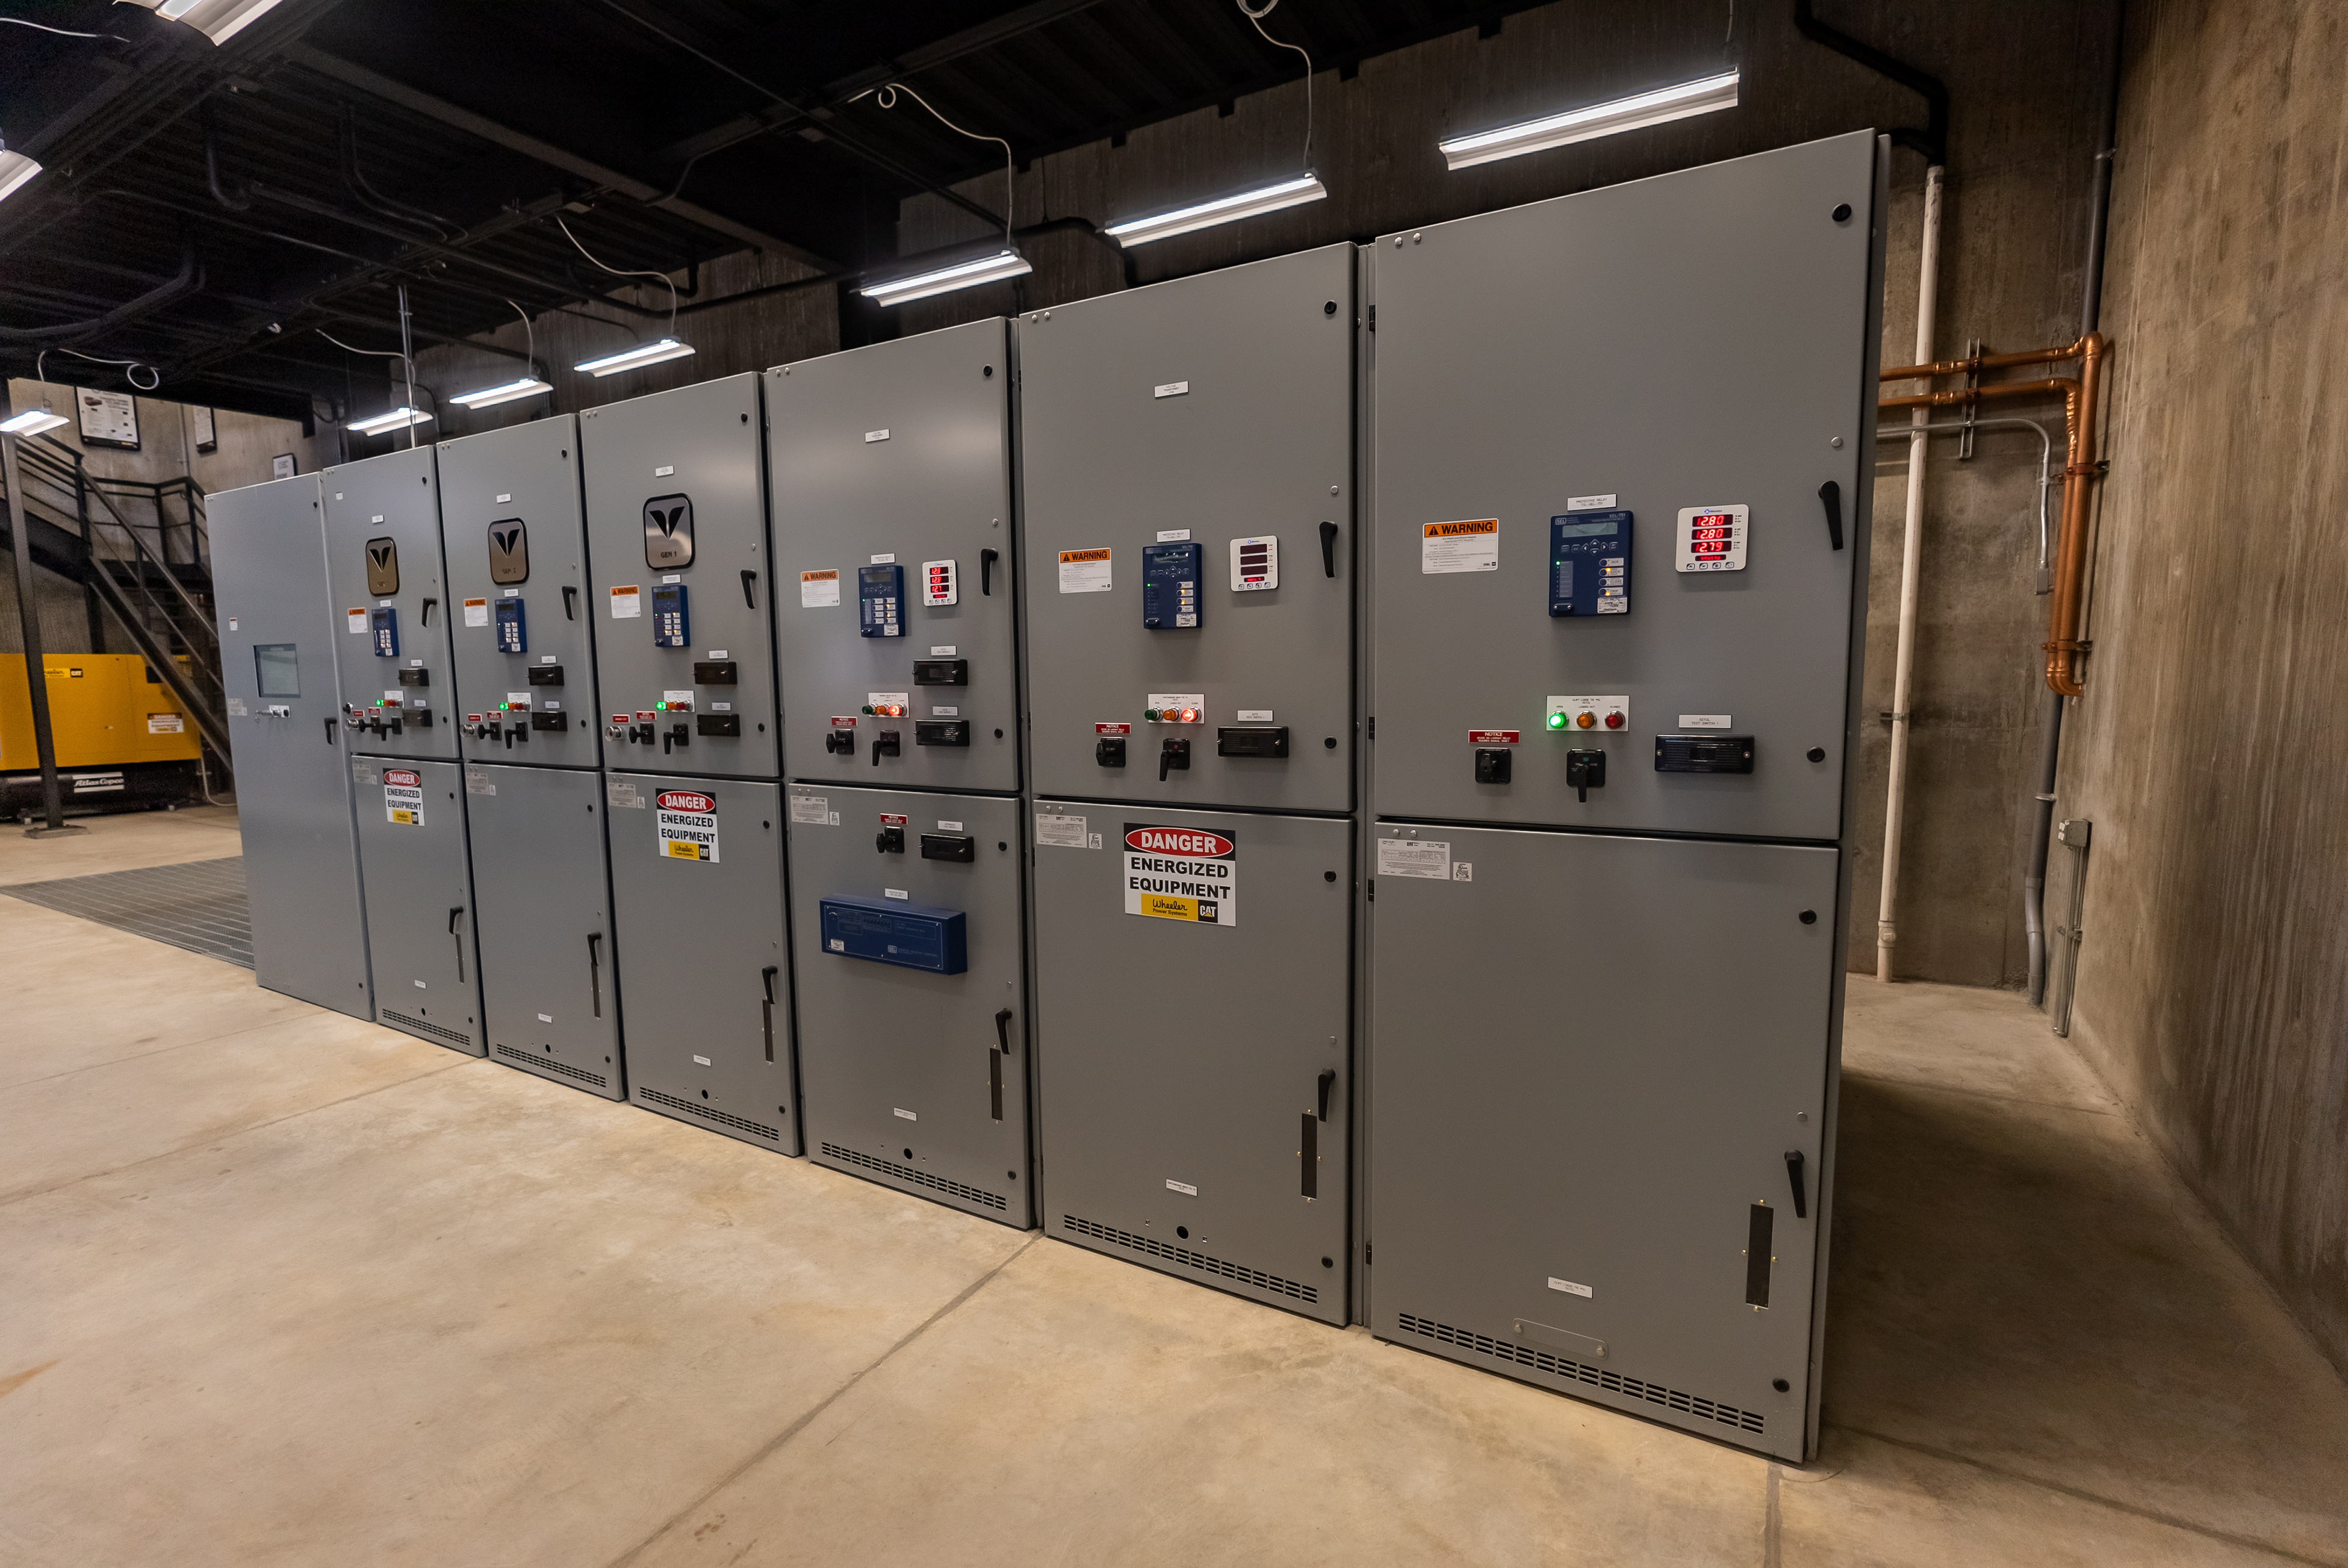 Snowbird Power Systems electric power systems for cogeneration plant Snowbird, UT